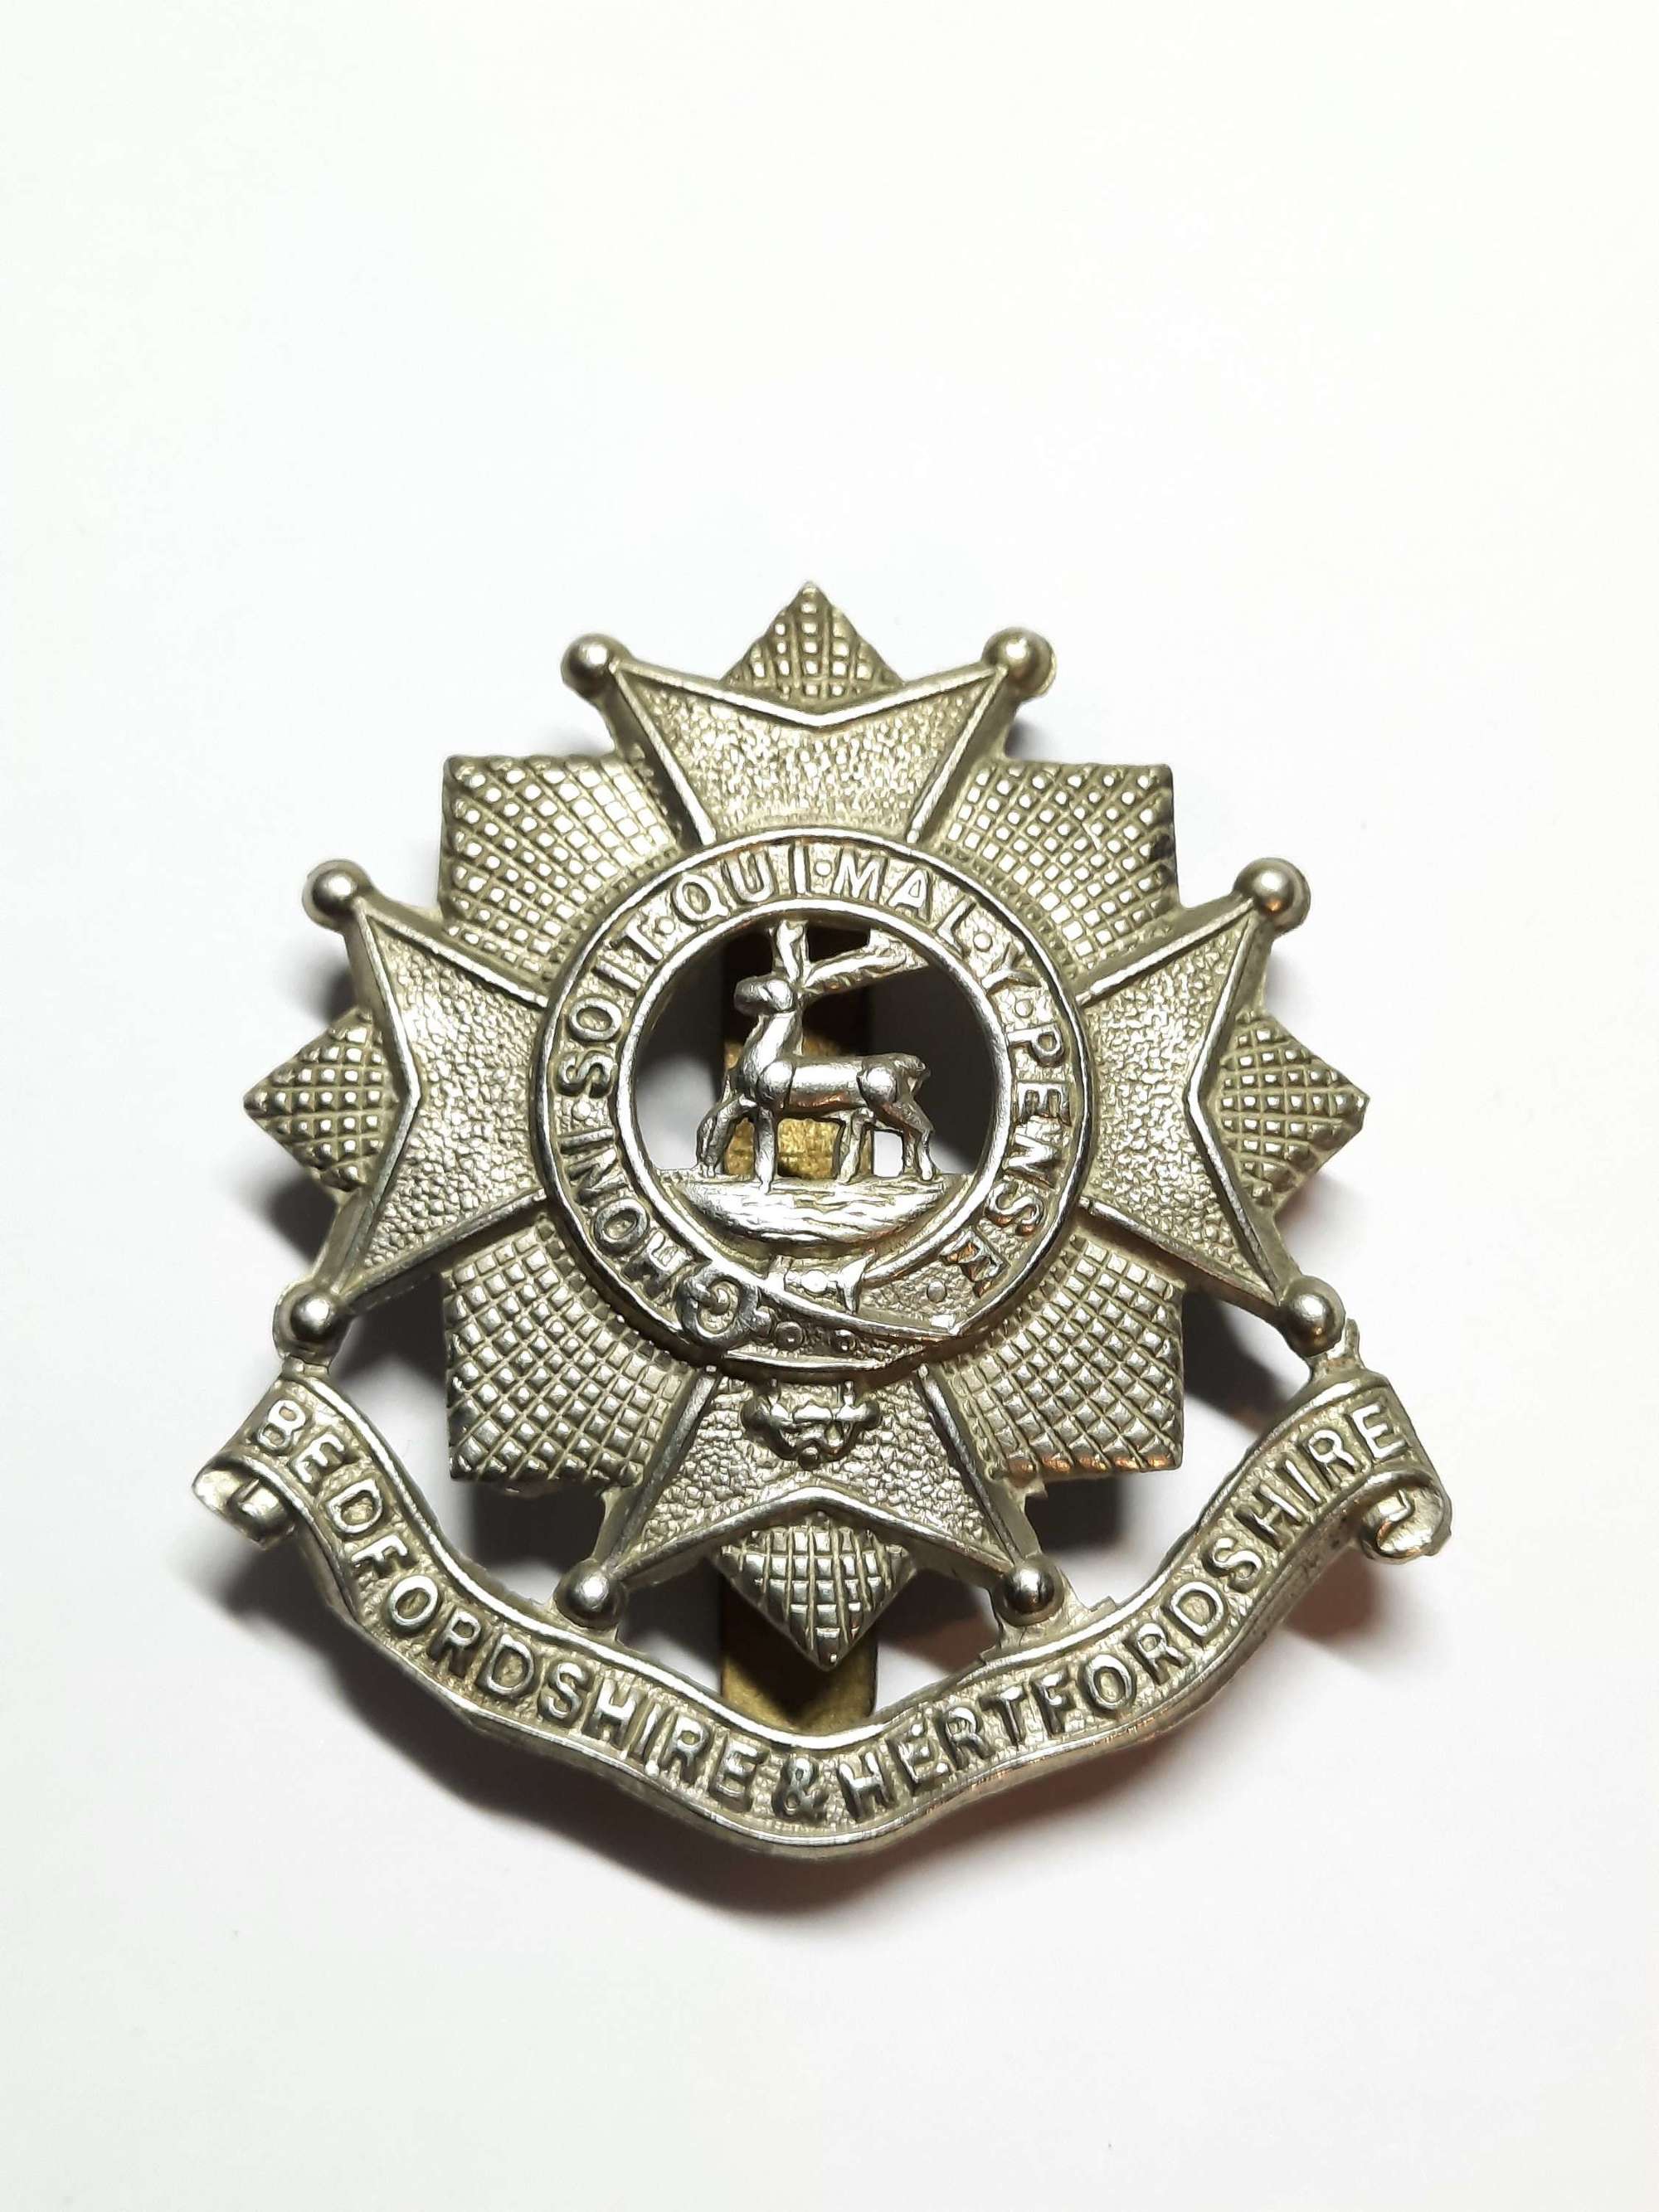 Bedfordshire and Hertfordshire Cap Badge